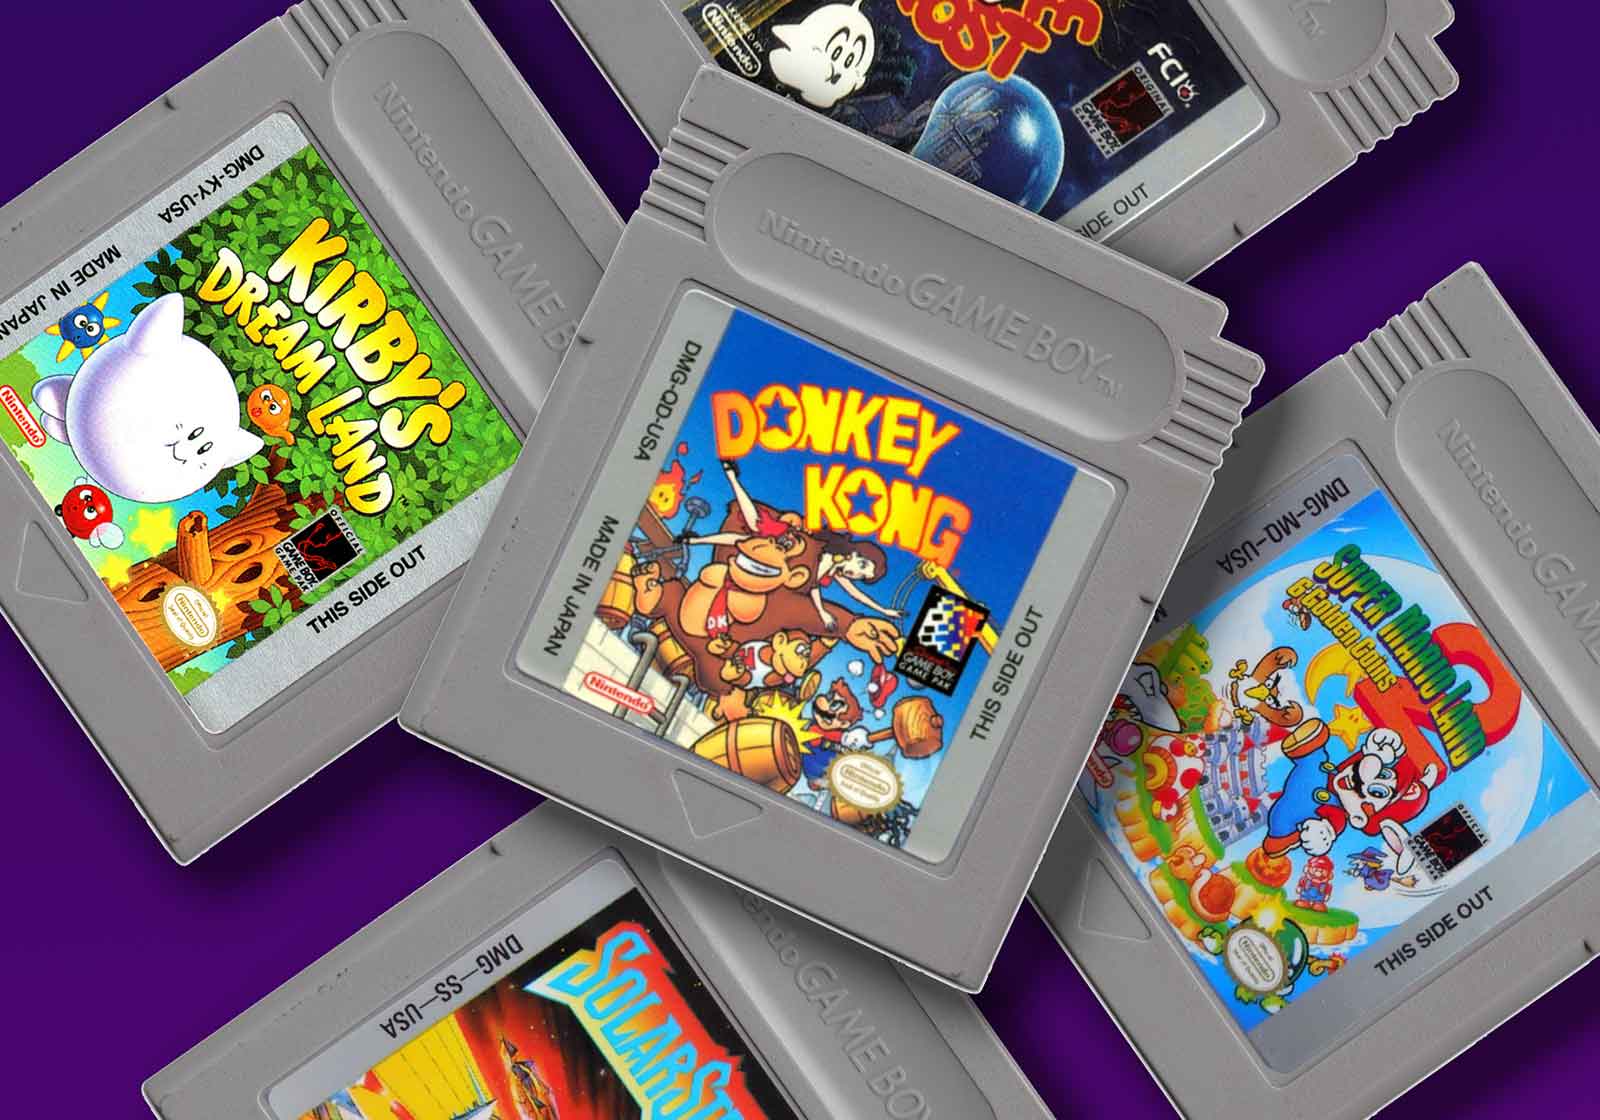 Game boy games download. Нинтендо геймбой. Геймбой 90-х. Nintendo game boy Color игры. Нинтендо геймбой адванс картриджи.